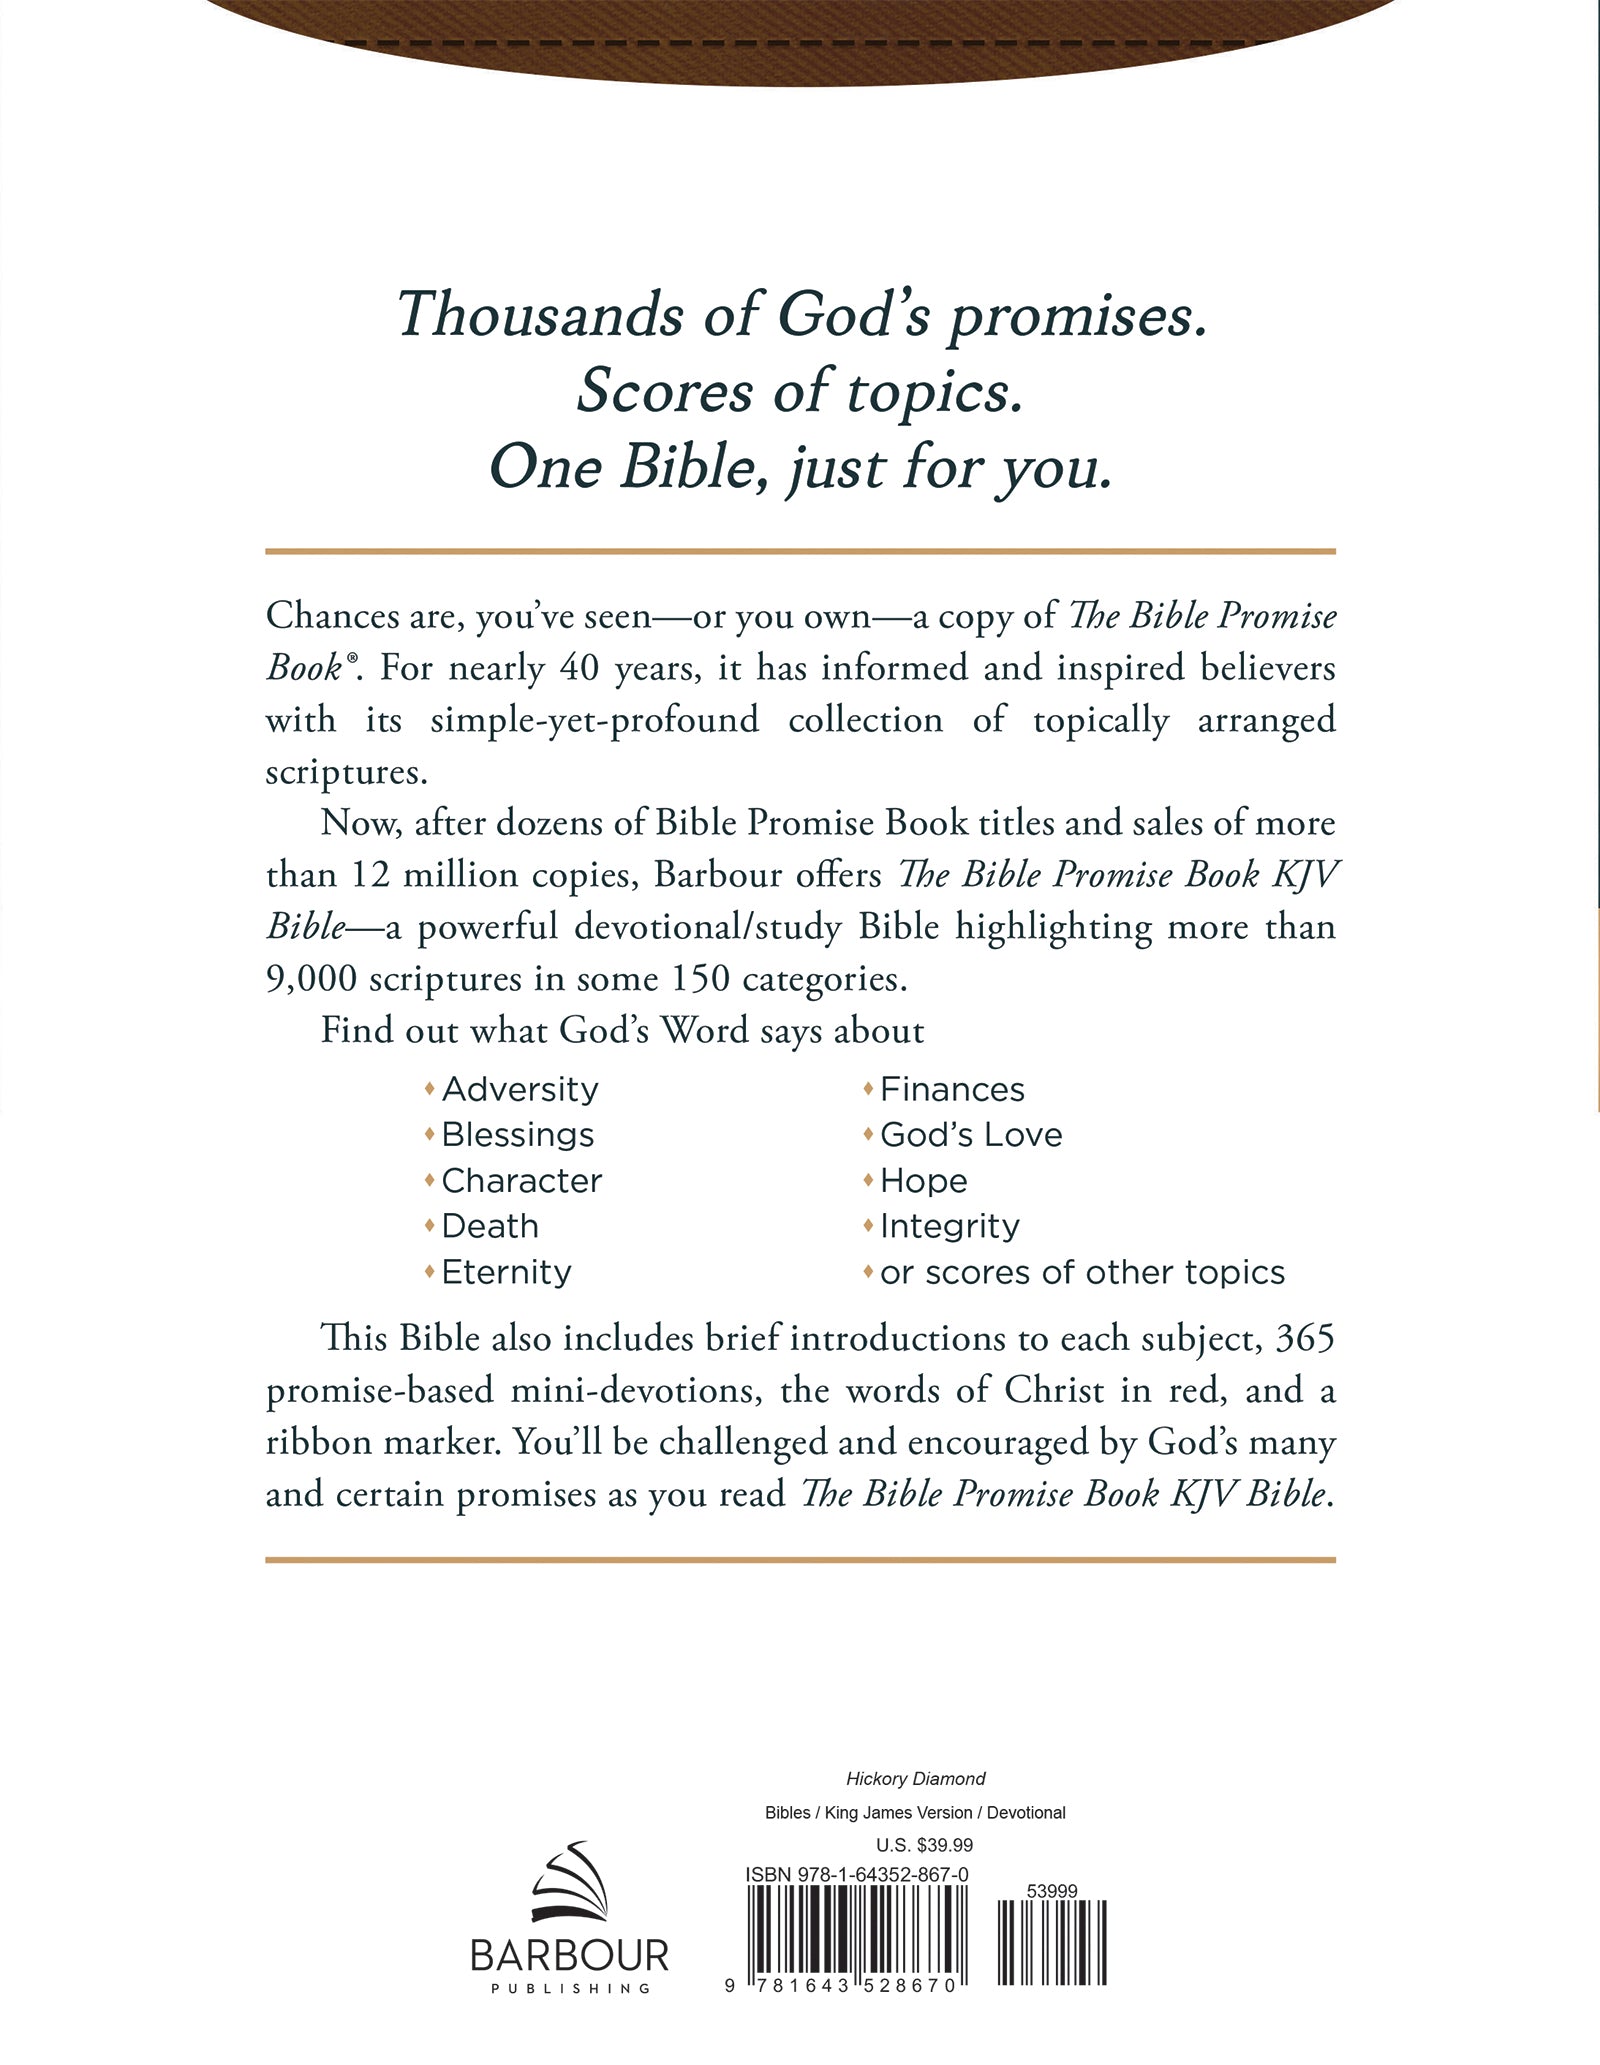 The Bible Promise Book KJV Bible [Hickory Diamond] - The Christian Gift Company